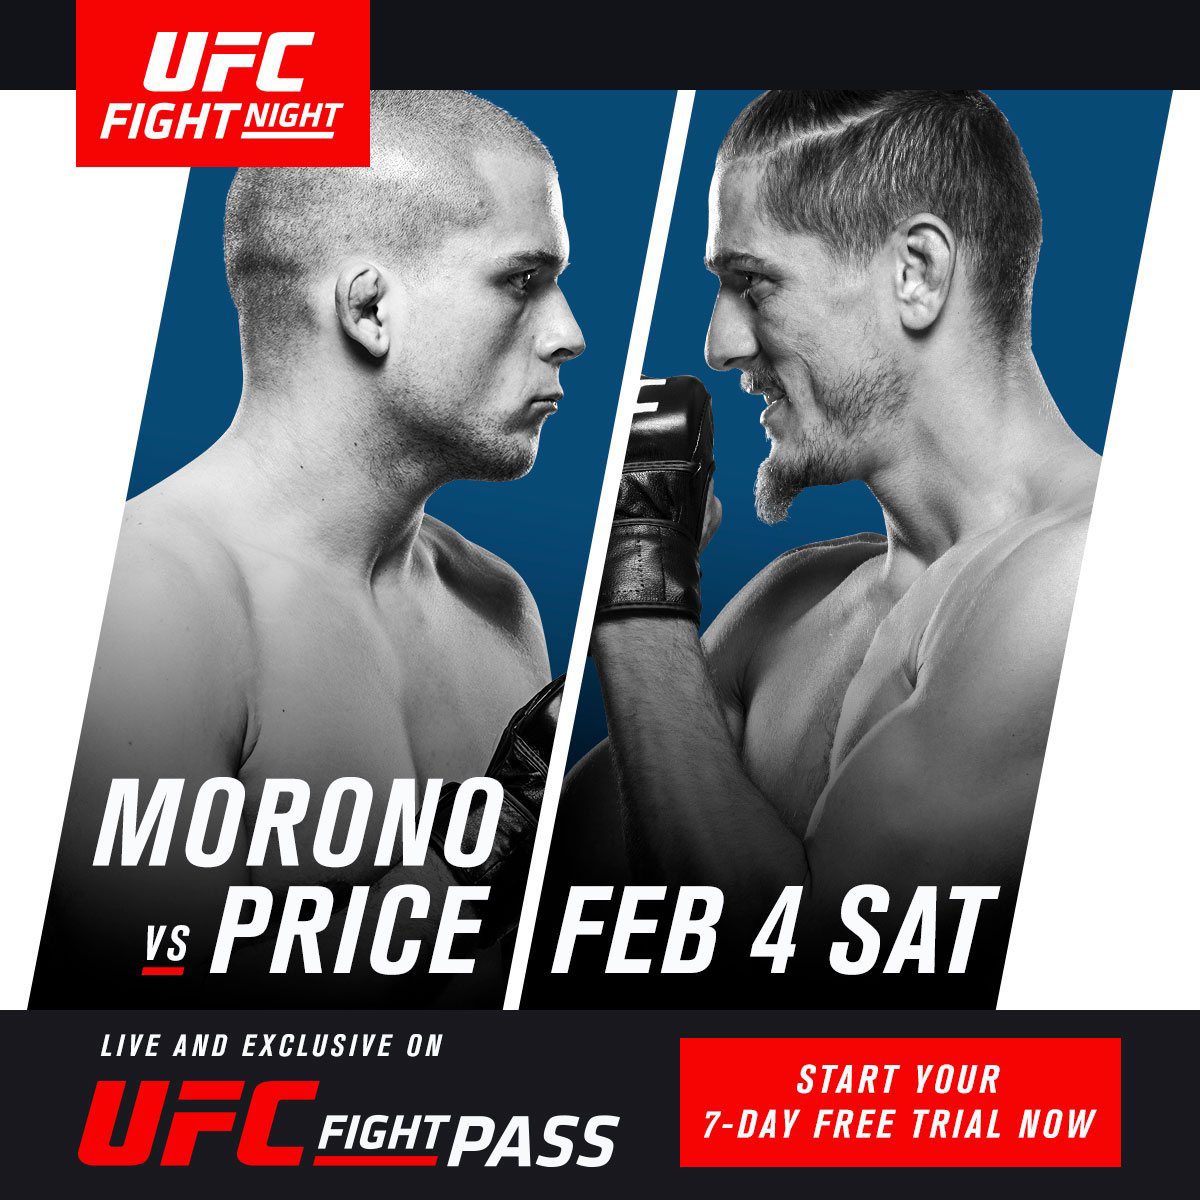 Poster/affiche UFC Fight Night 104 - Houston